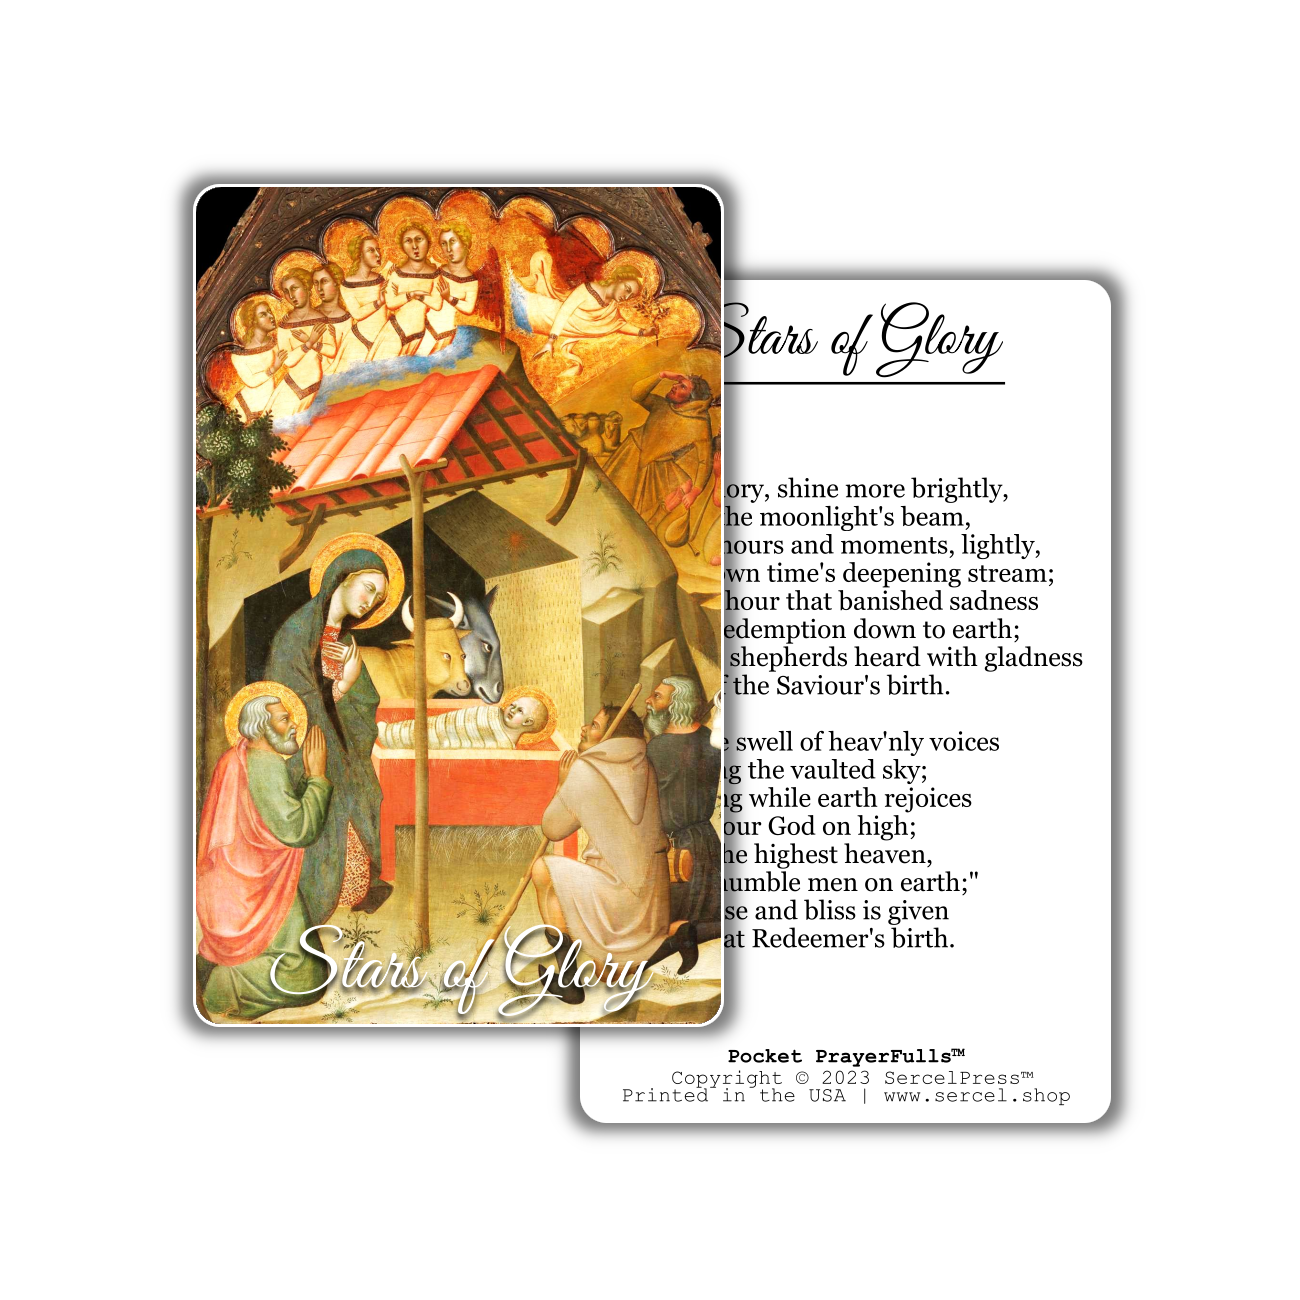 Stars of Glory: Pocket PrayerFulls™ | Durable Wallet Prayer Cards | Advent, Christmas, Nativity Gift | Catholic Hymns